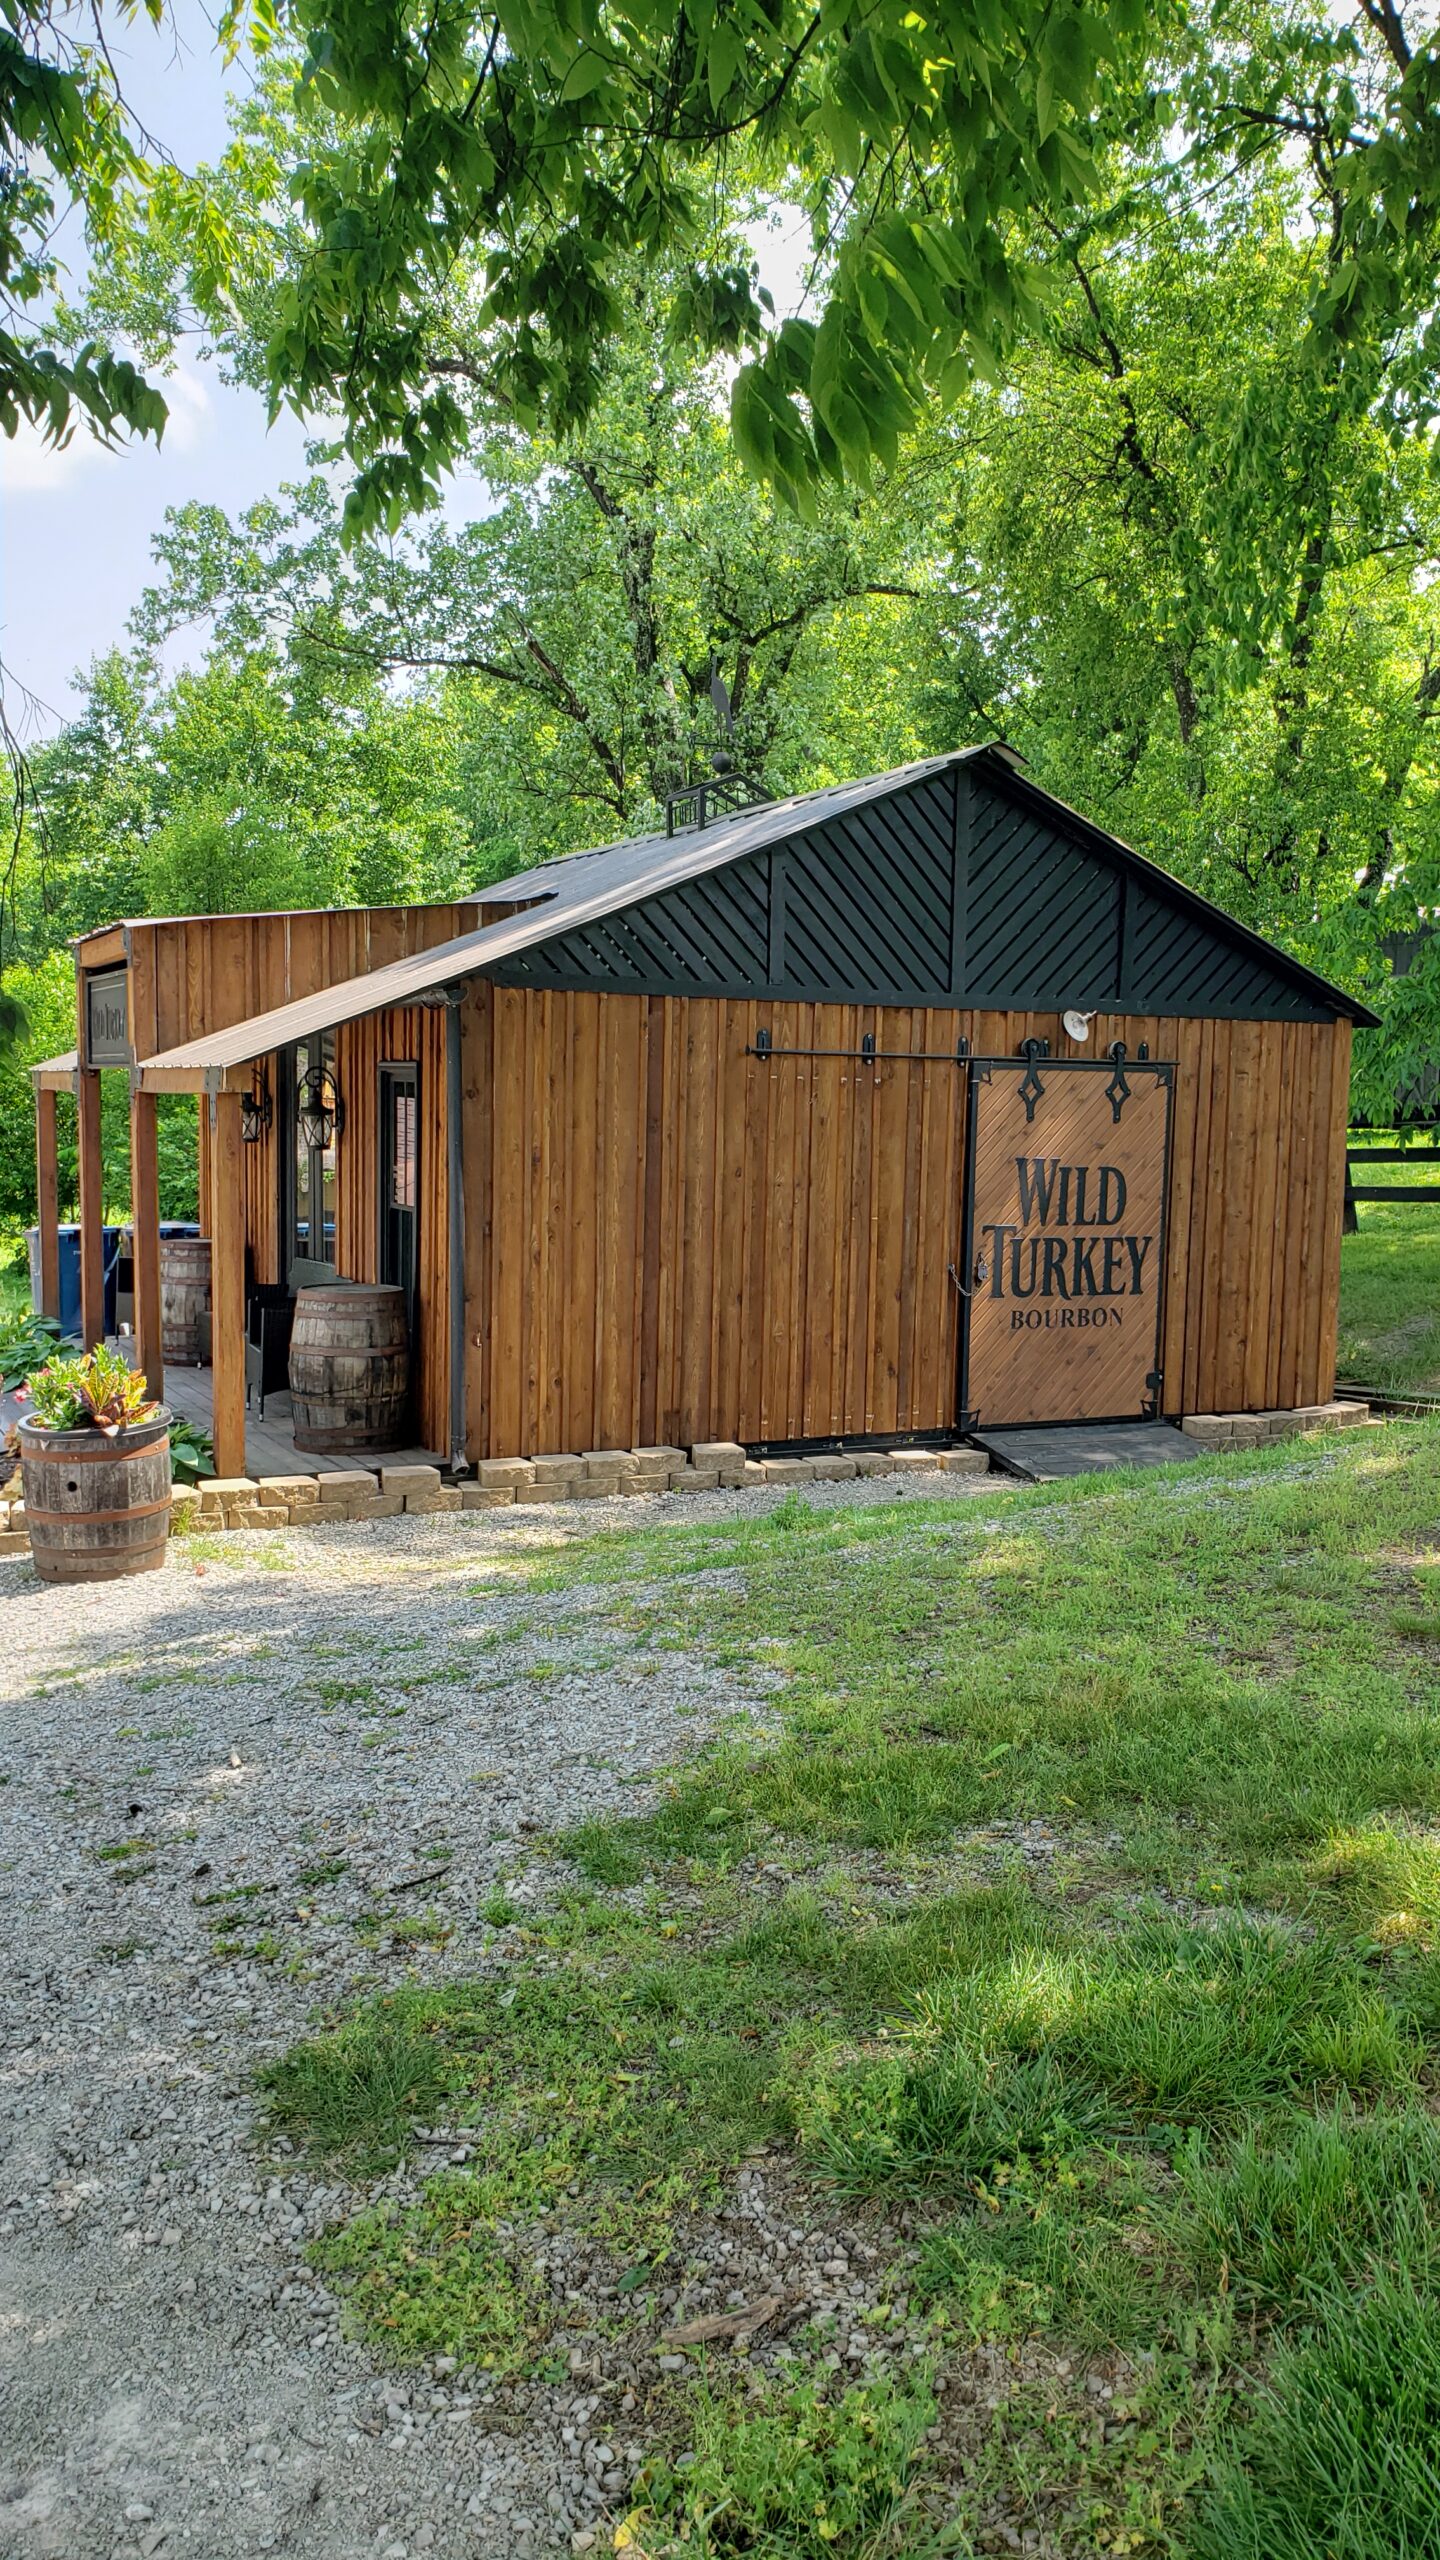 Kentucky Bourbon Trail 2023 - Wild Turkey - Temporary Distillery Tour Location